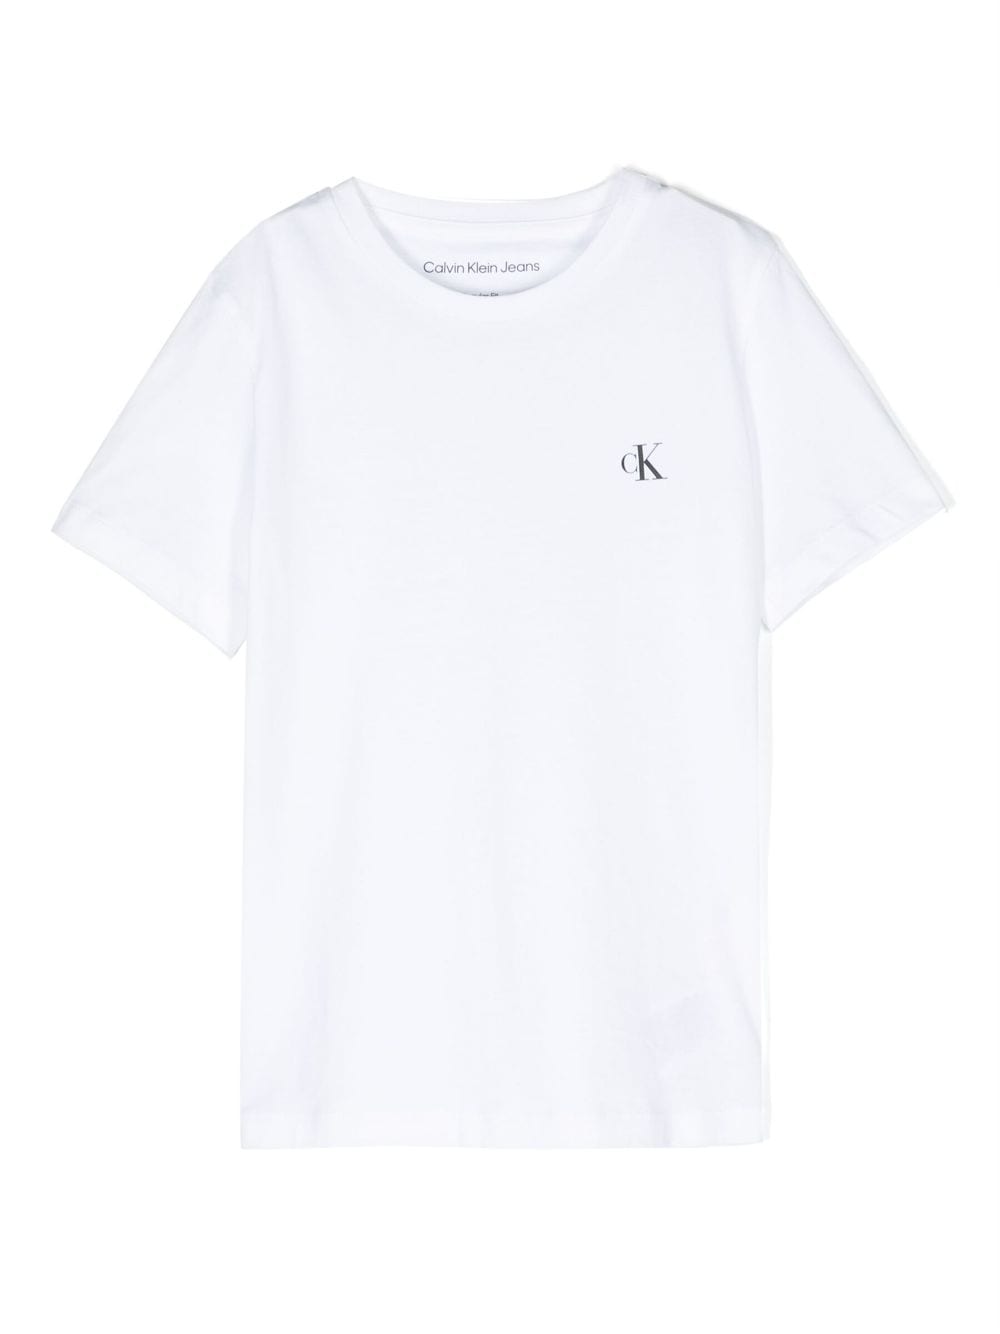 Calvin Klein Kids logo-print cotton T-shirt set - Grijs